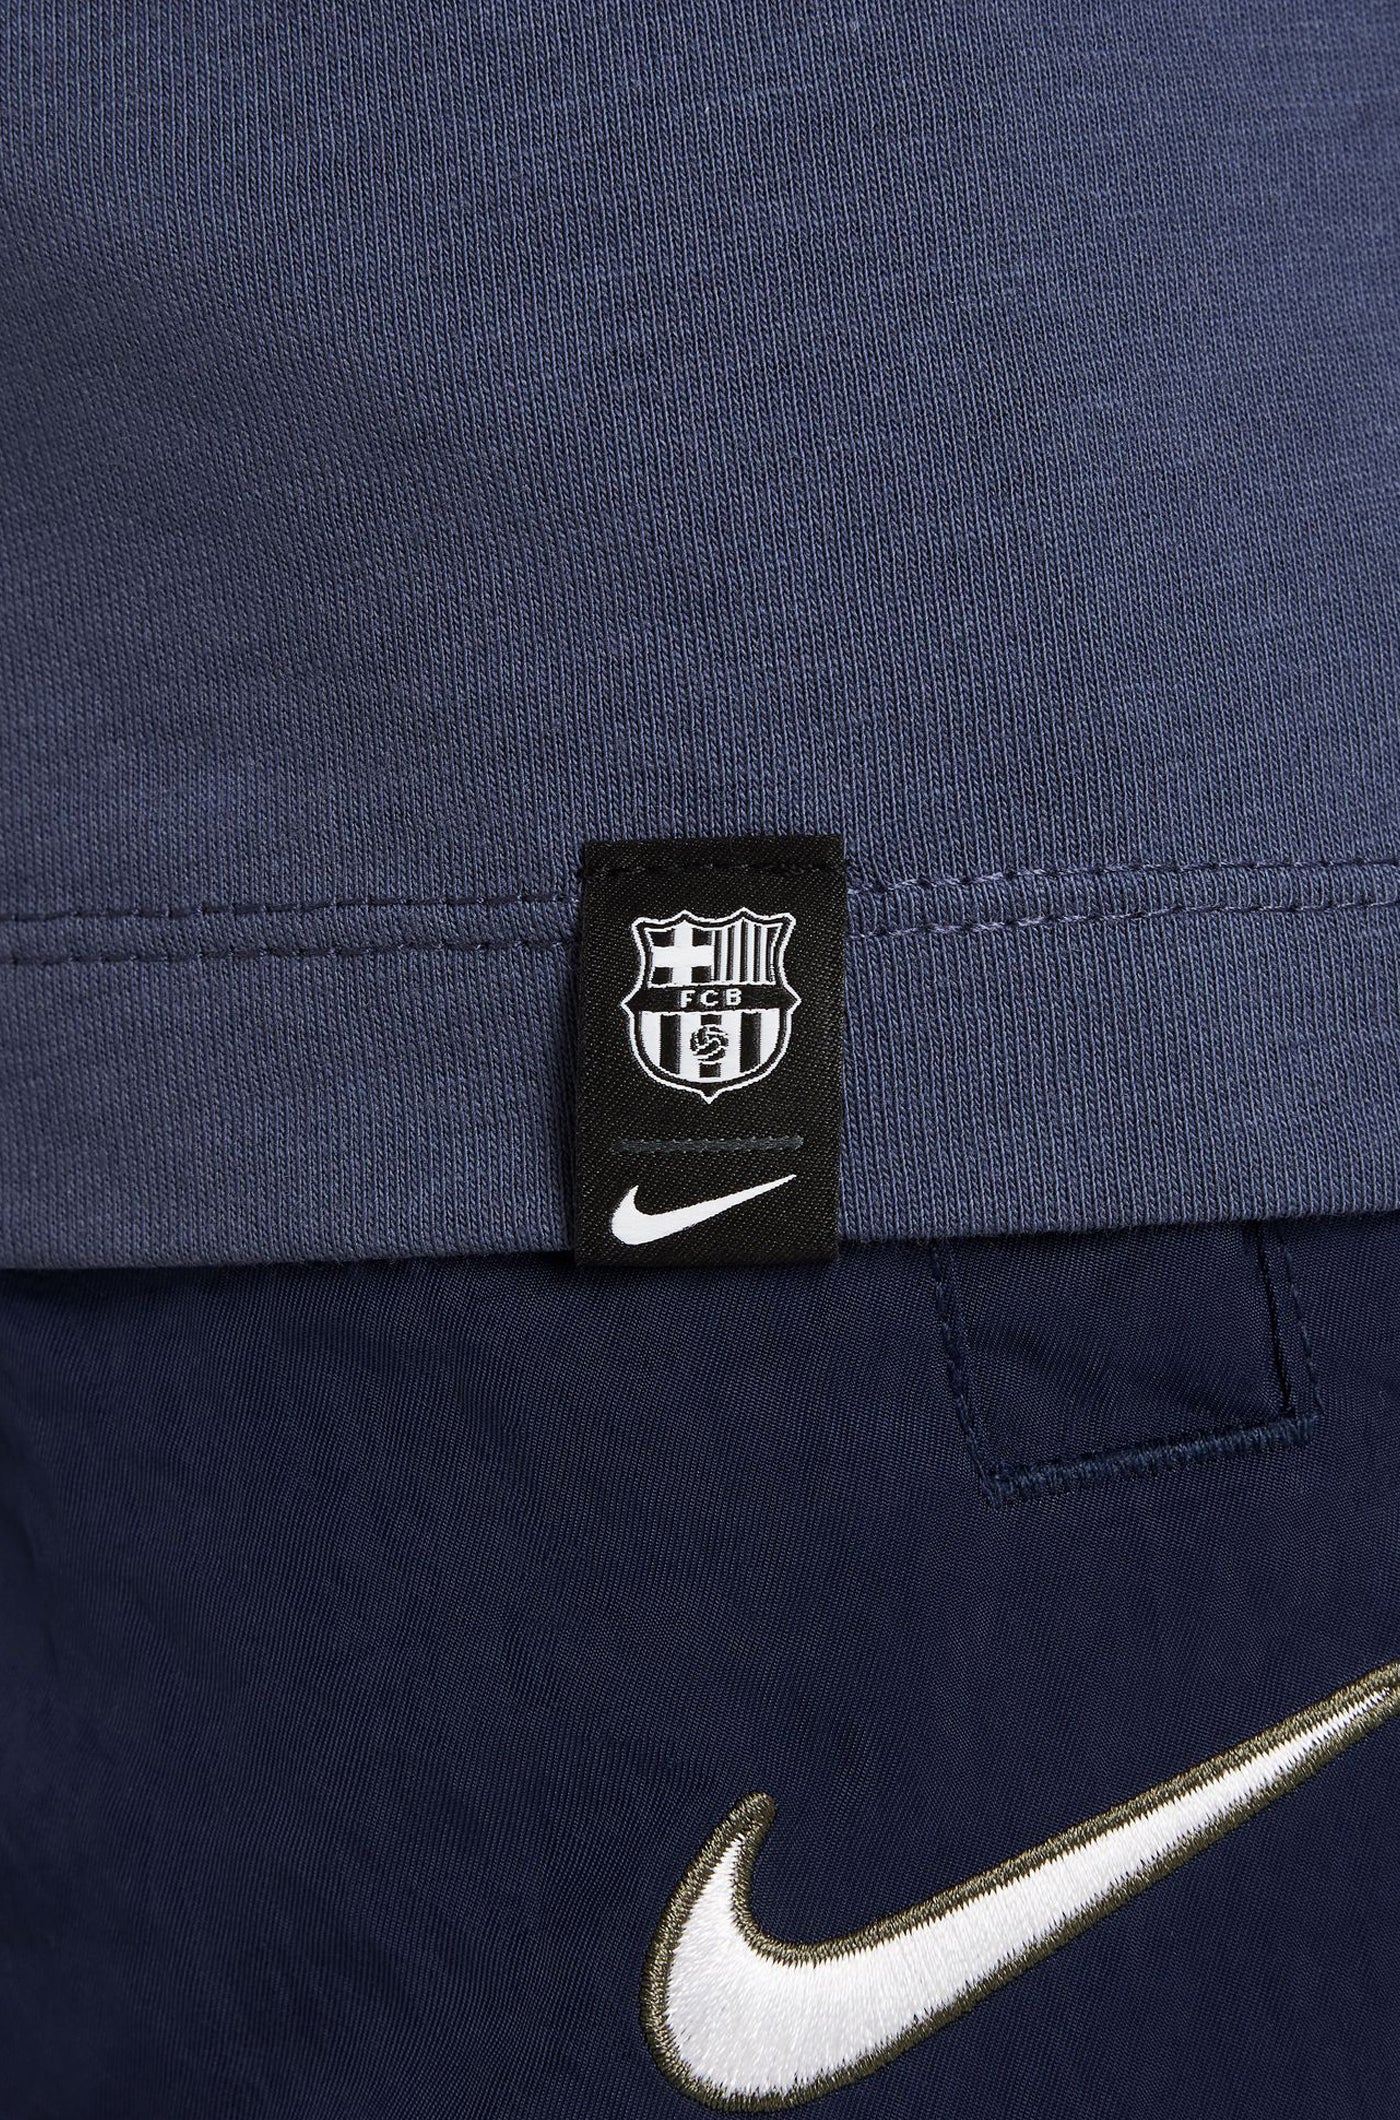 T-Shirt blau Barça Nike - Junior